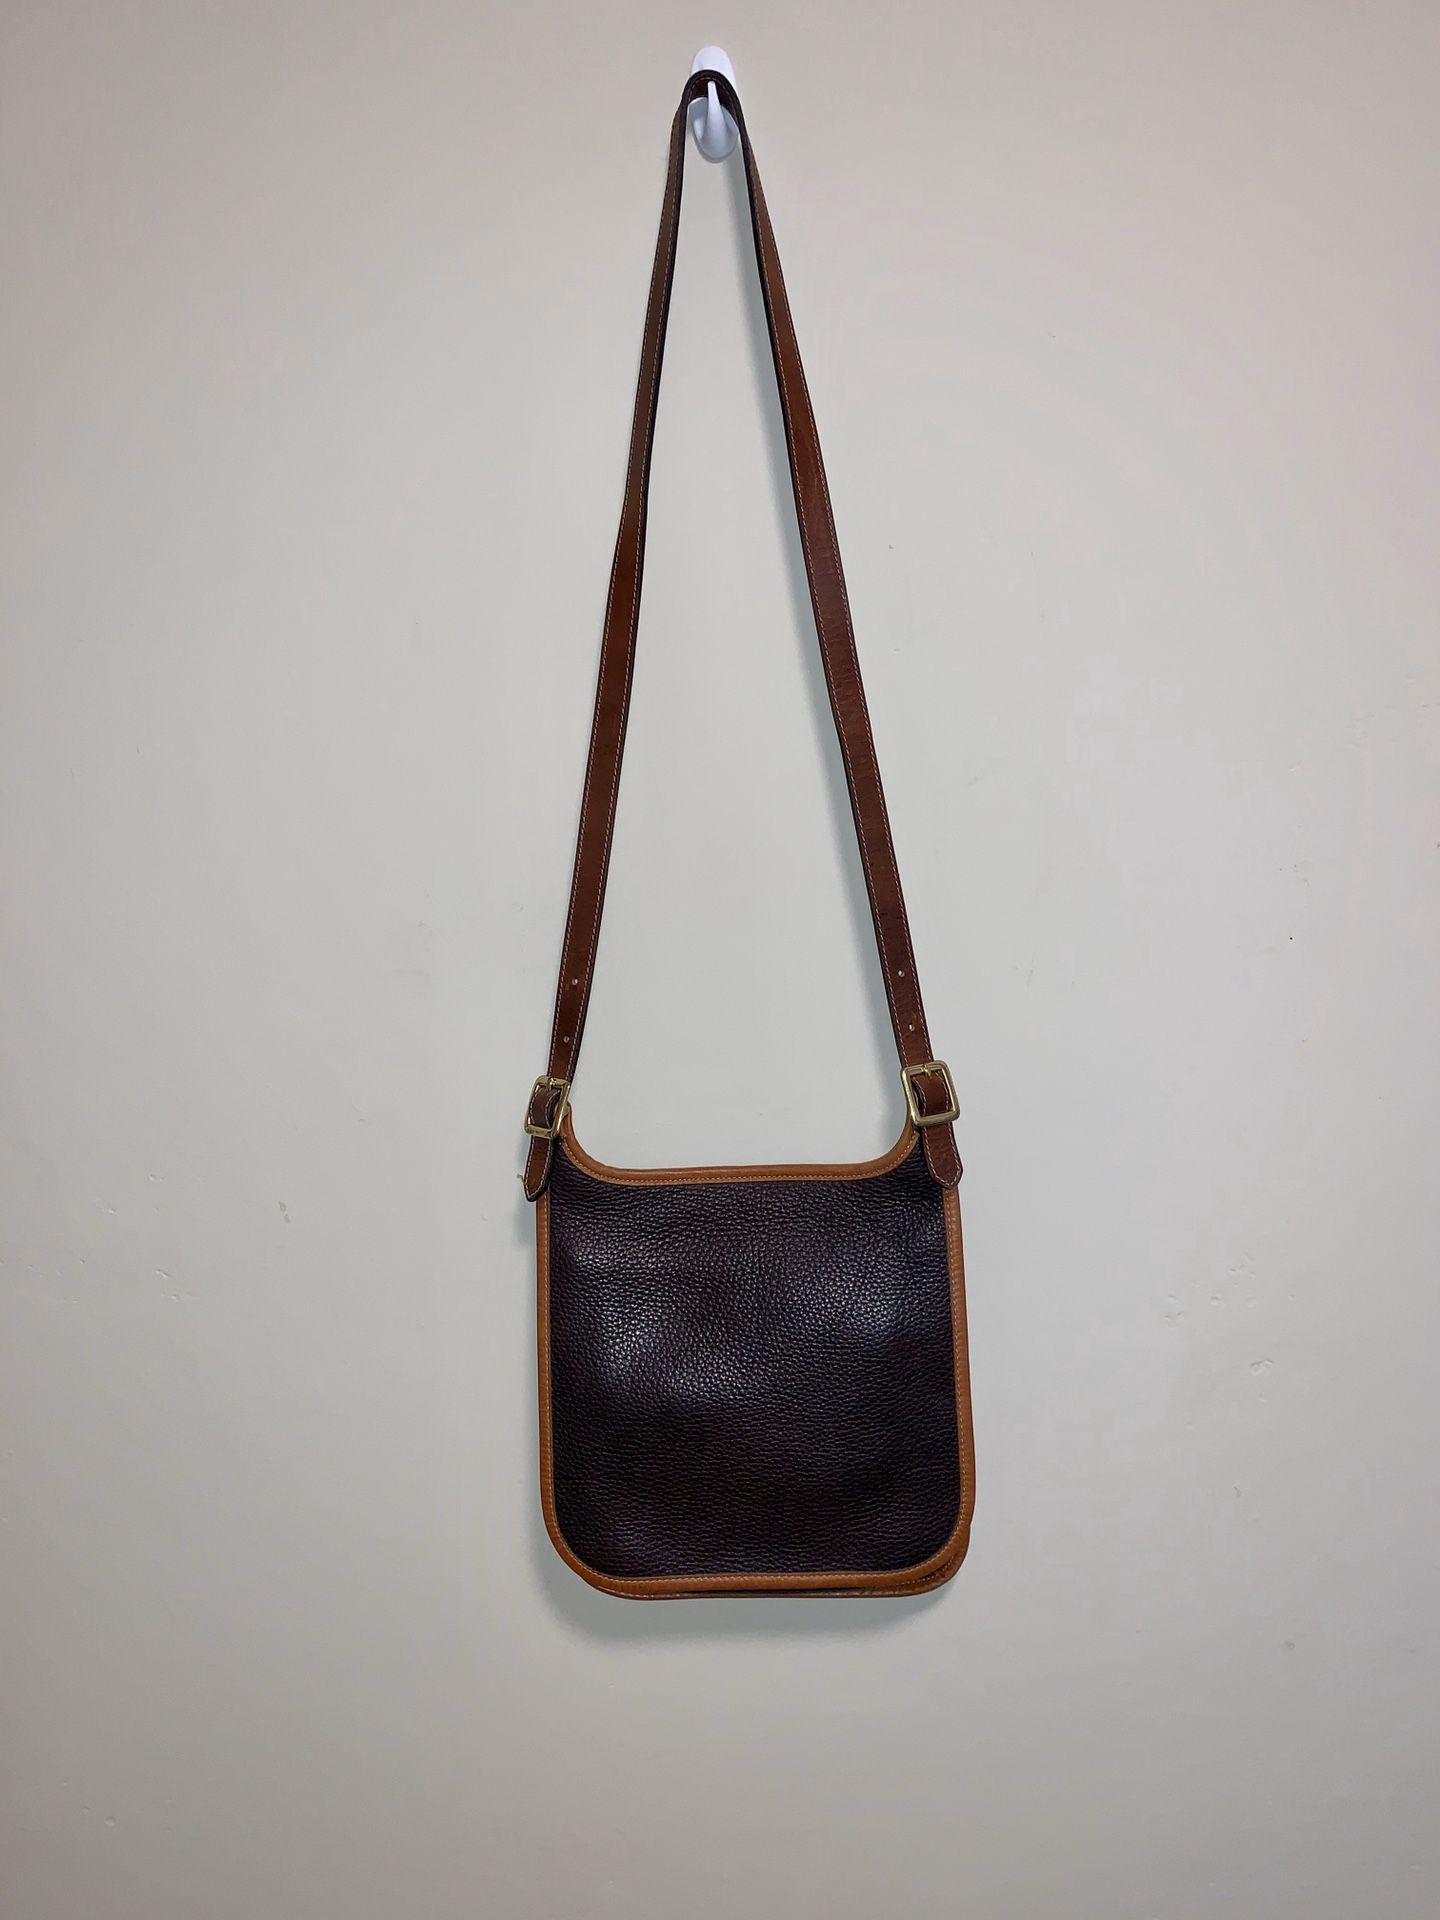 Cole Haan leather crossbody/messenger bag